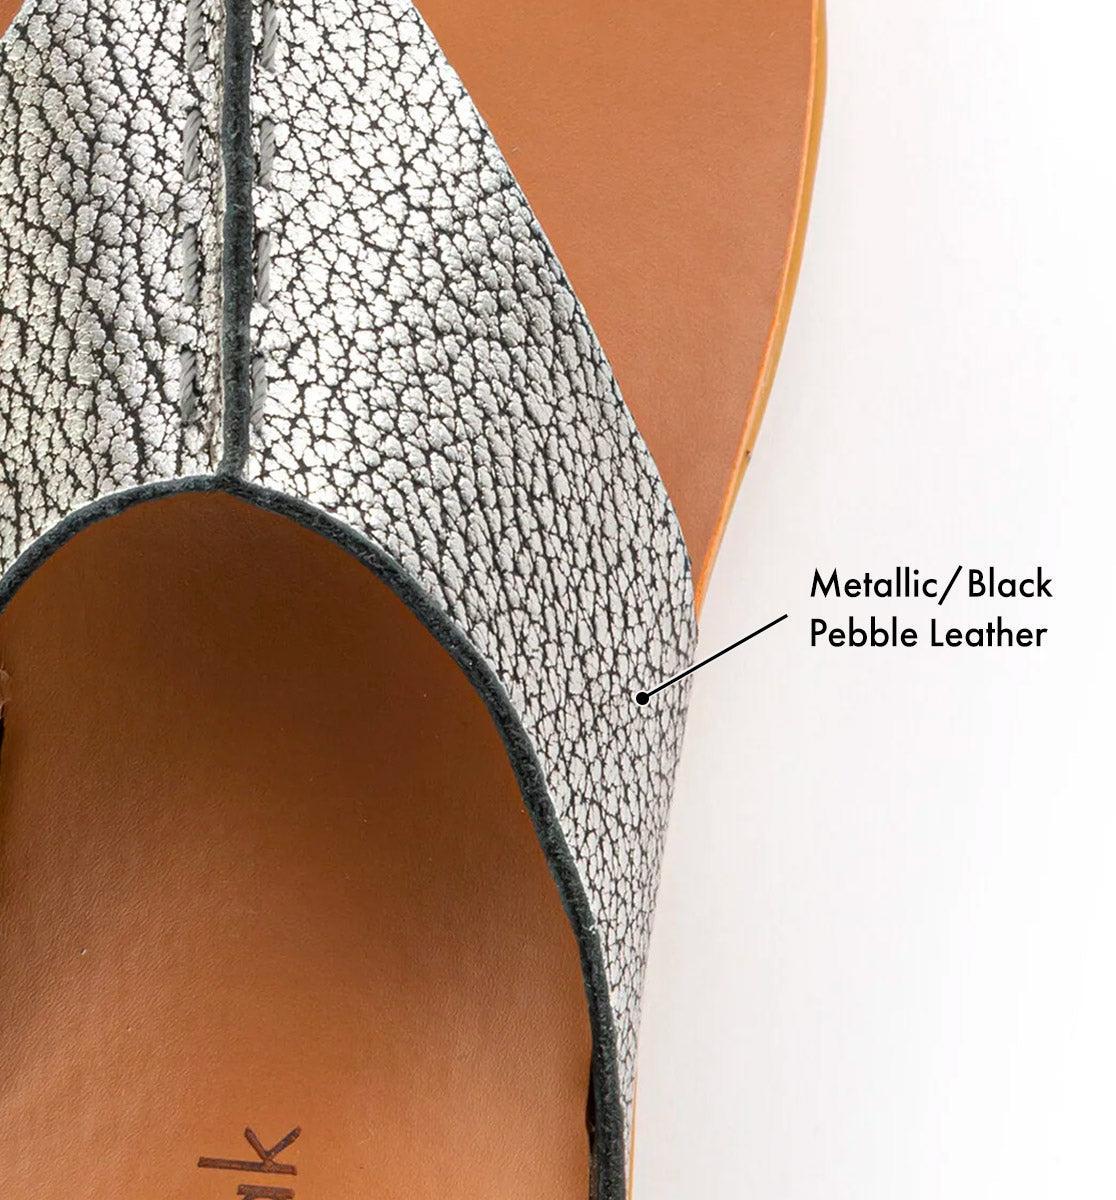 Comfortiva Gladia Woven Sandal Product Image